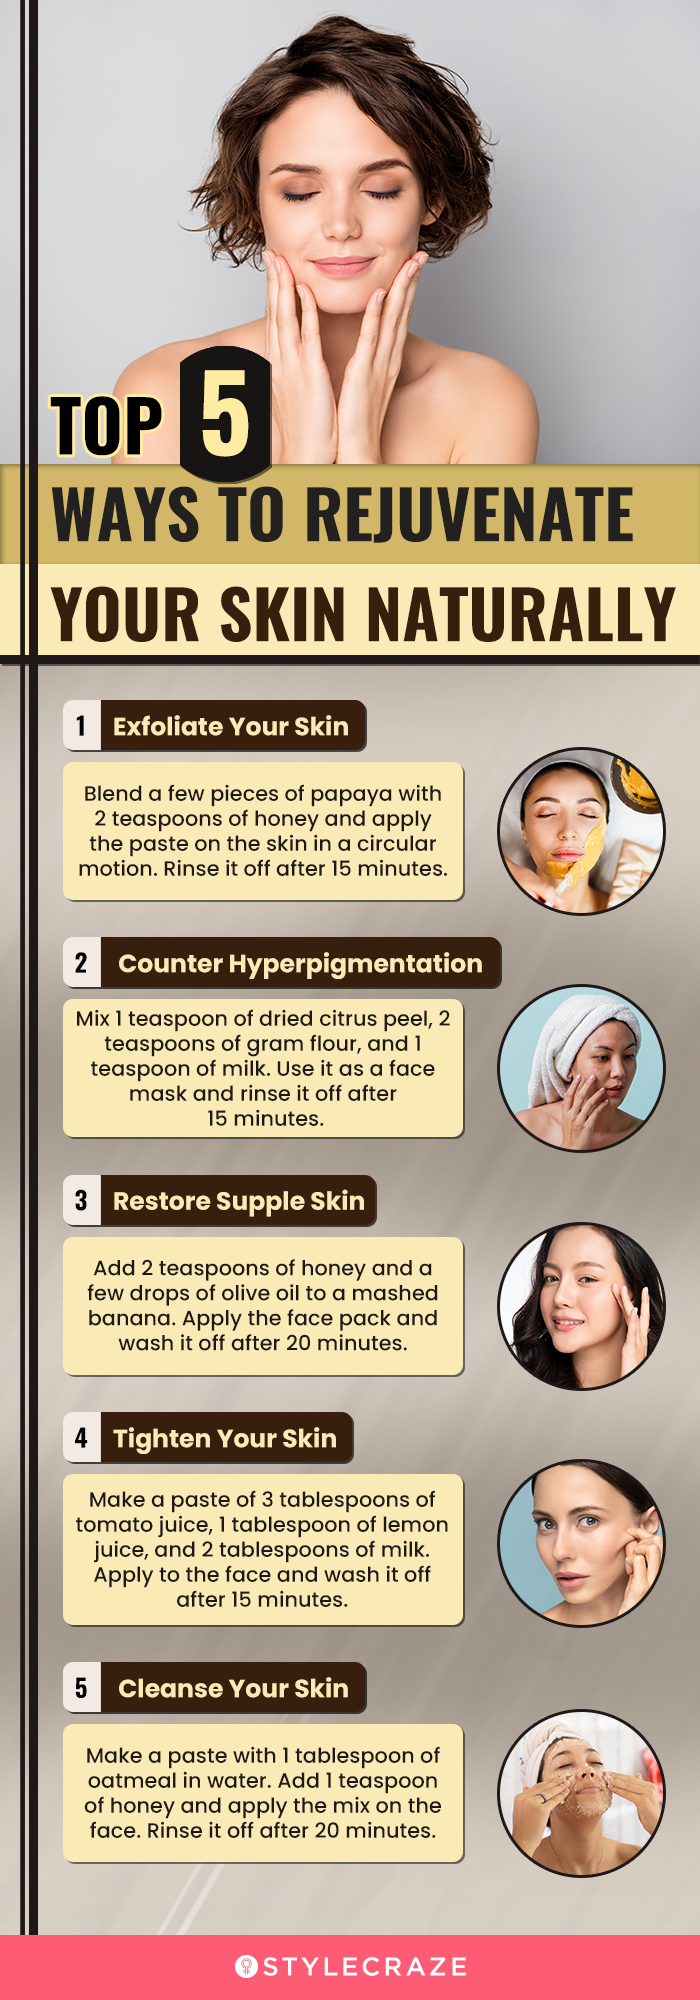 top 5 ways to rejuvenate skin naturally (infographic)